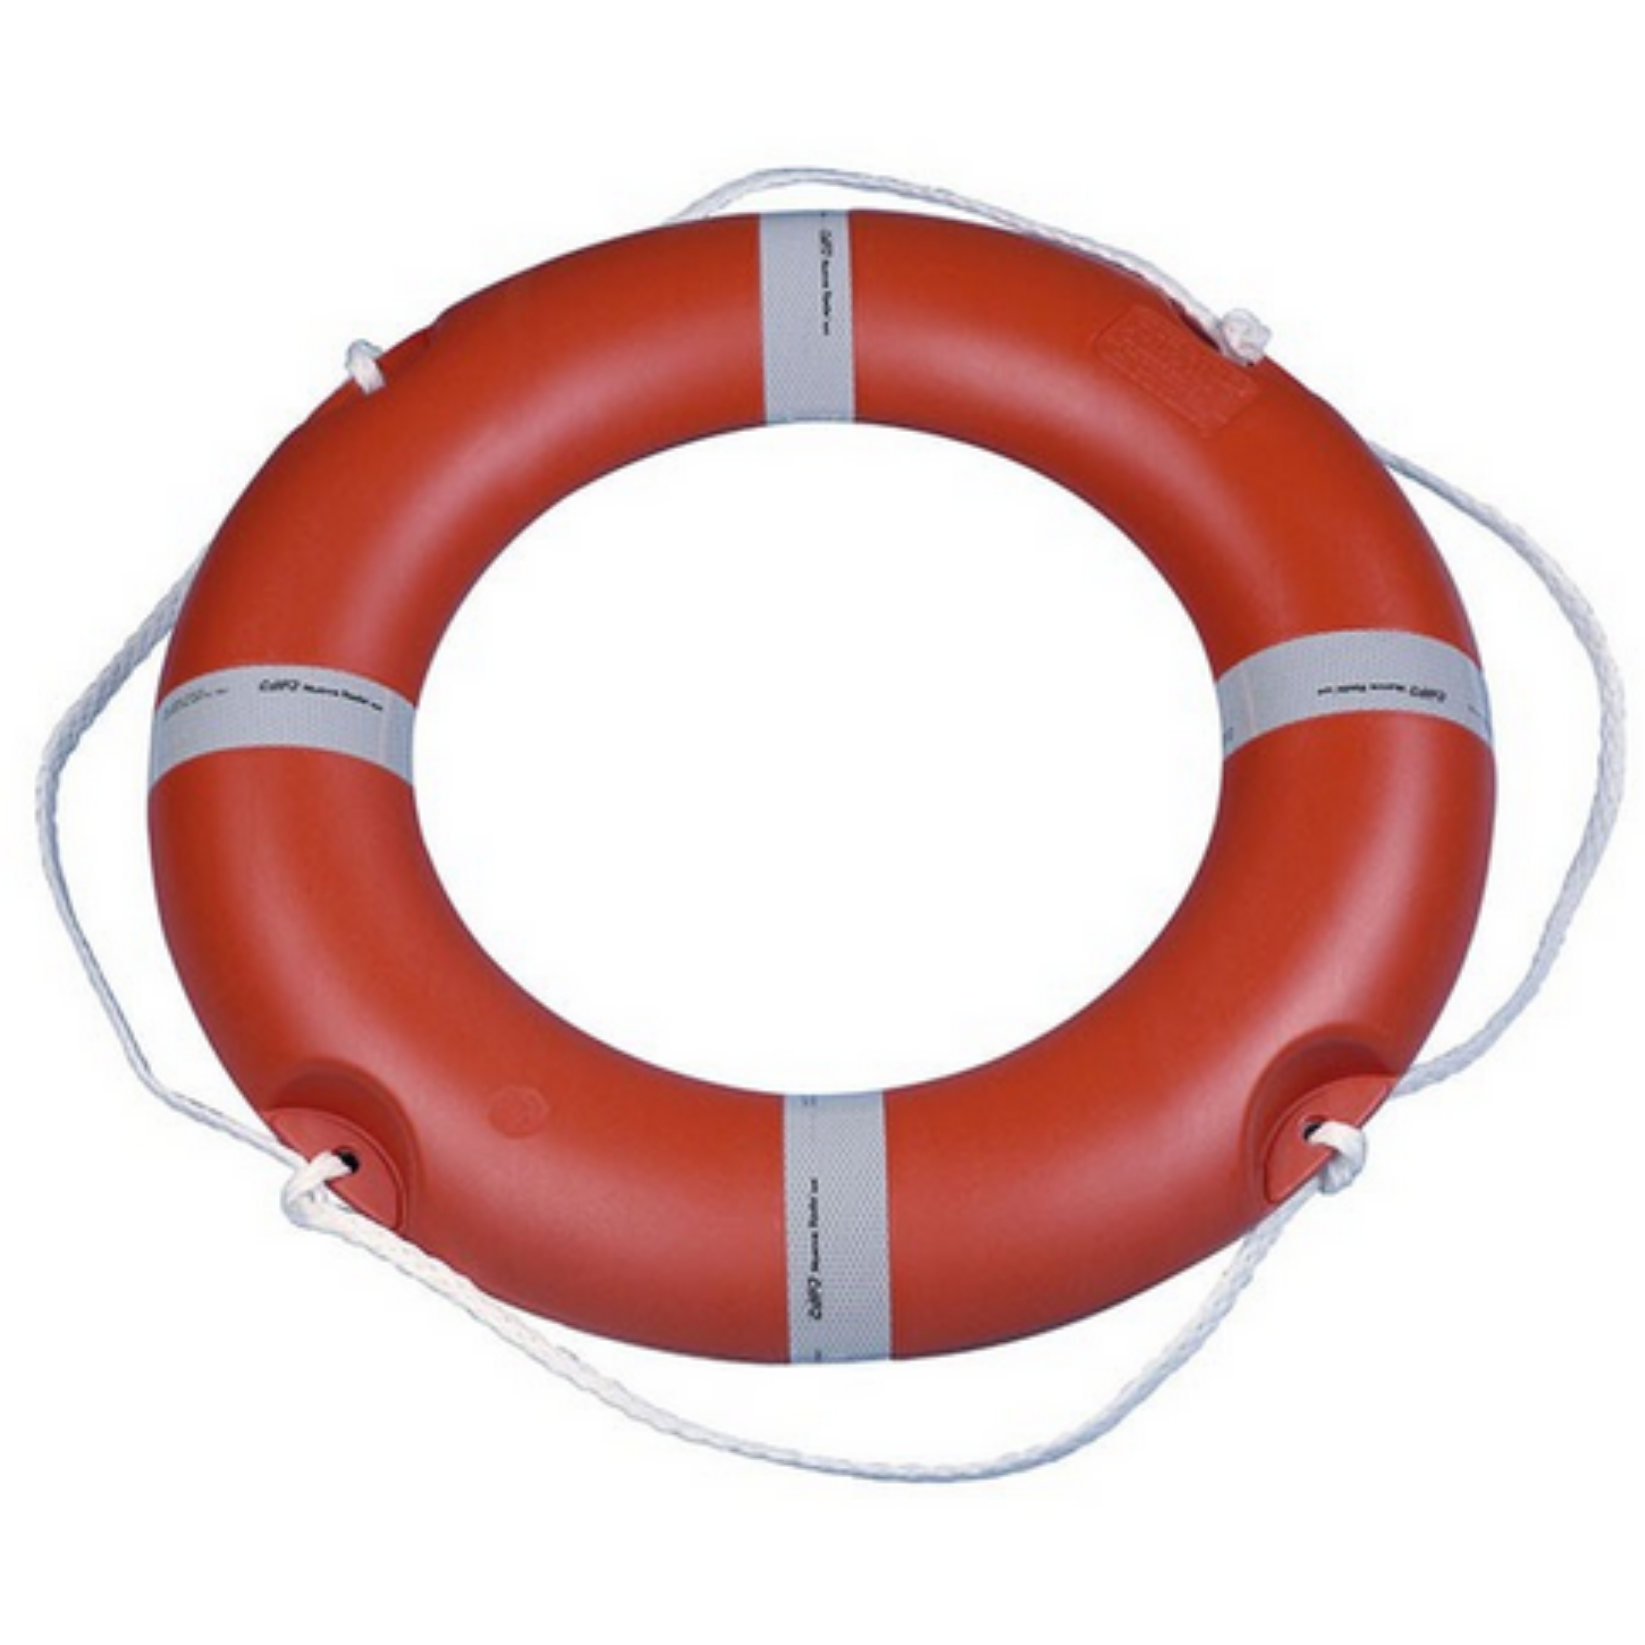 Plastimo Ring Lifebuoy SOLAS 73cm Lifebelt